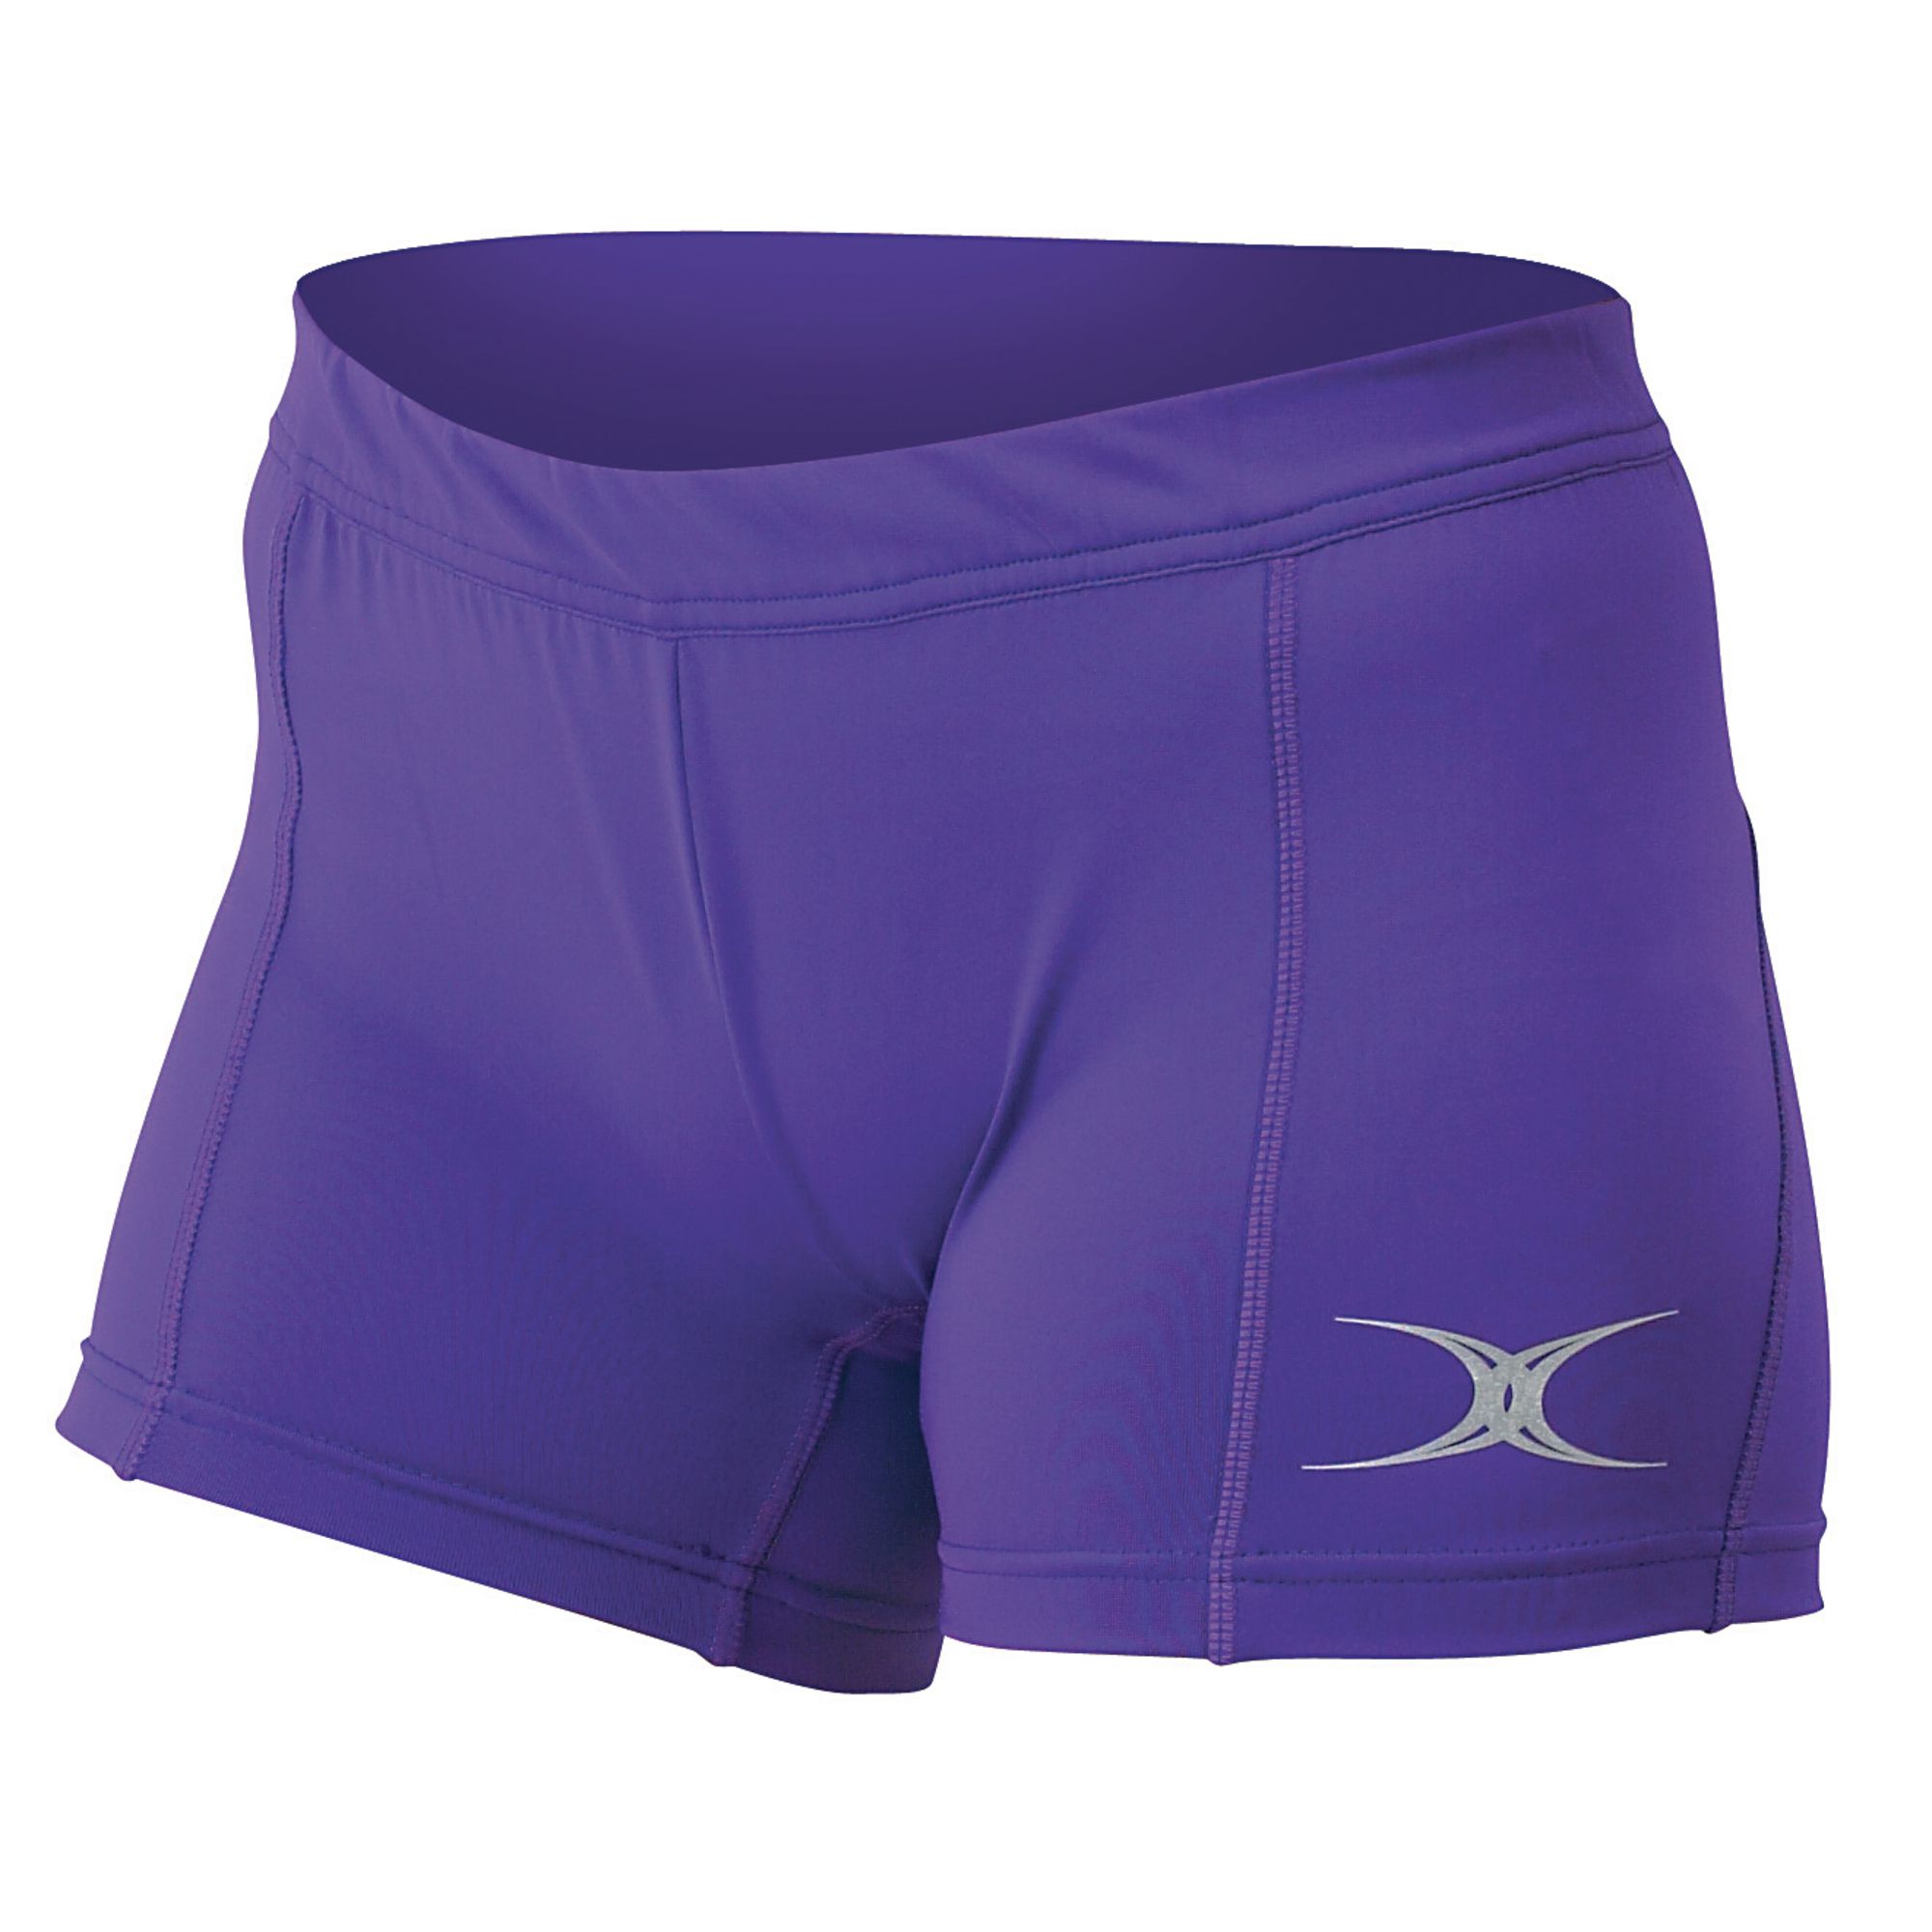 Gilbert Eclipse Netball Shorts S6 Purple